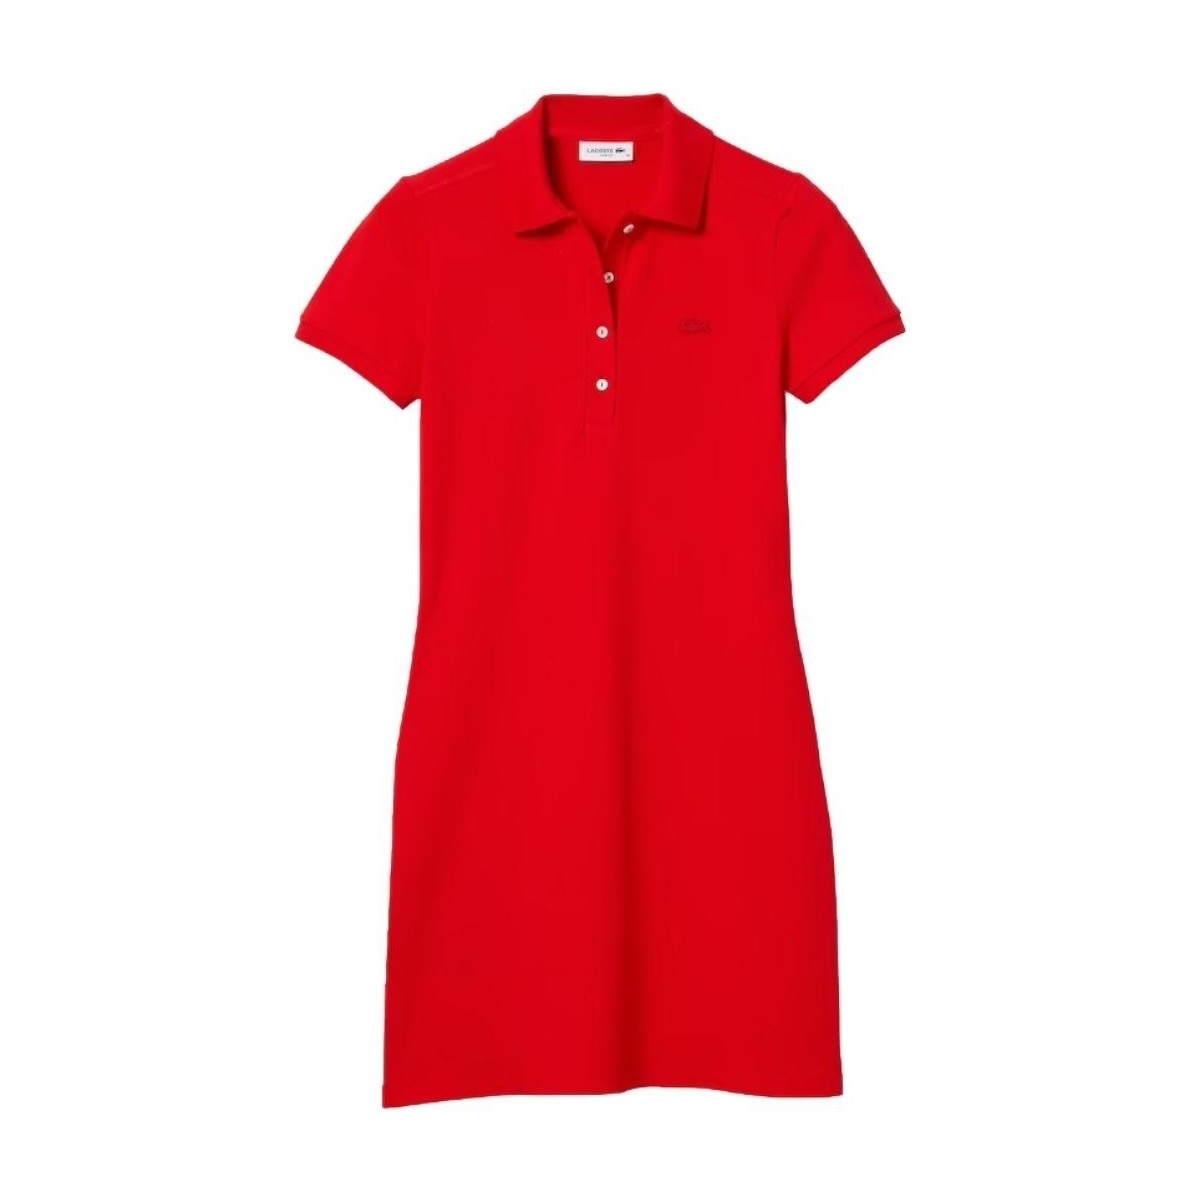 Vêtements Femme Robes Lacoste Robe Polo  Ref 52459 WTU Rouge Rouge